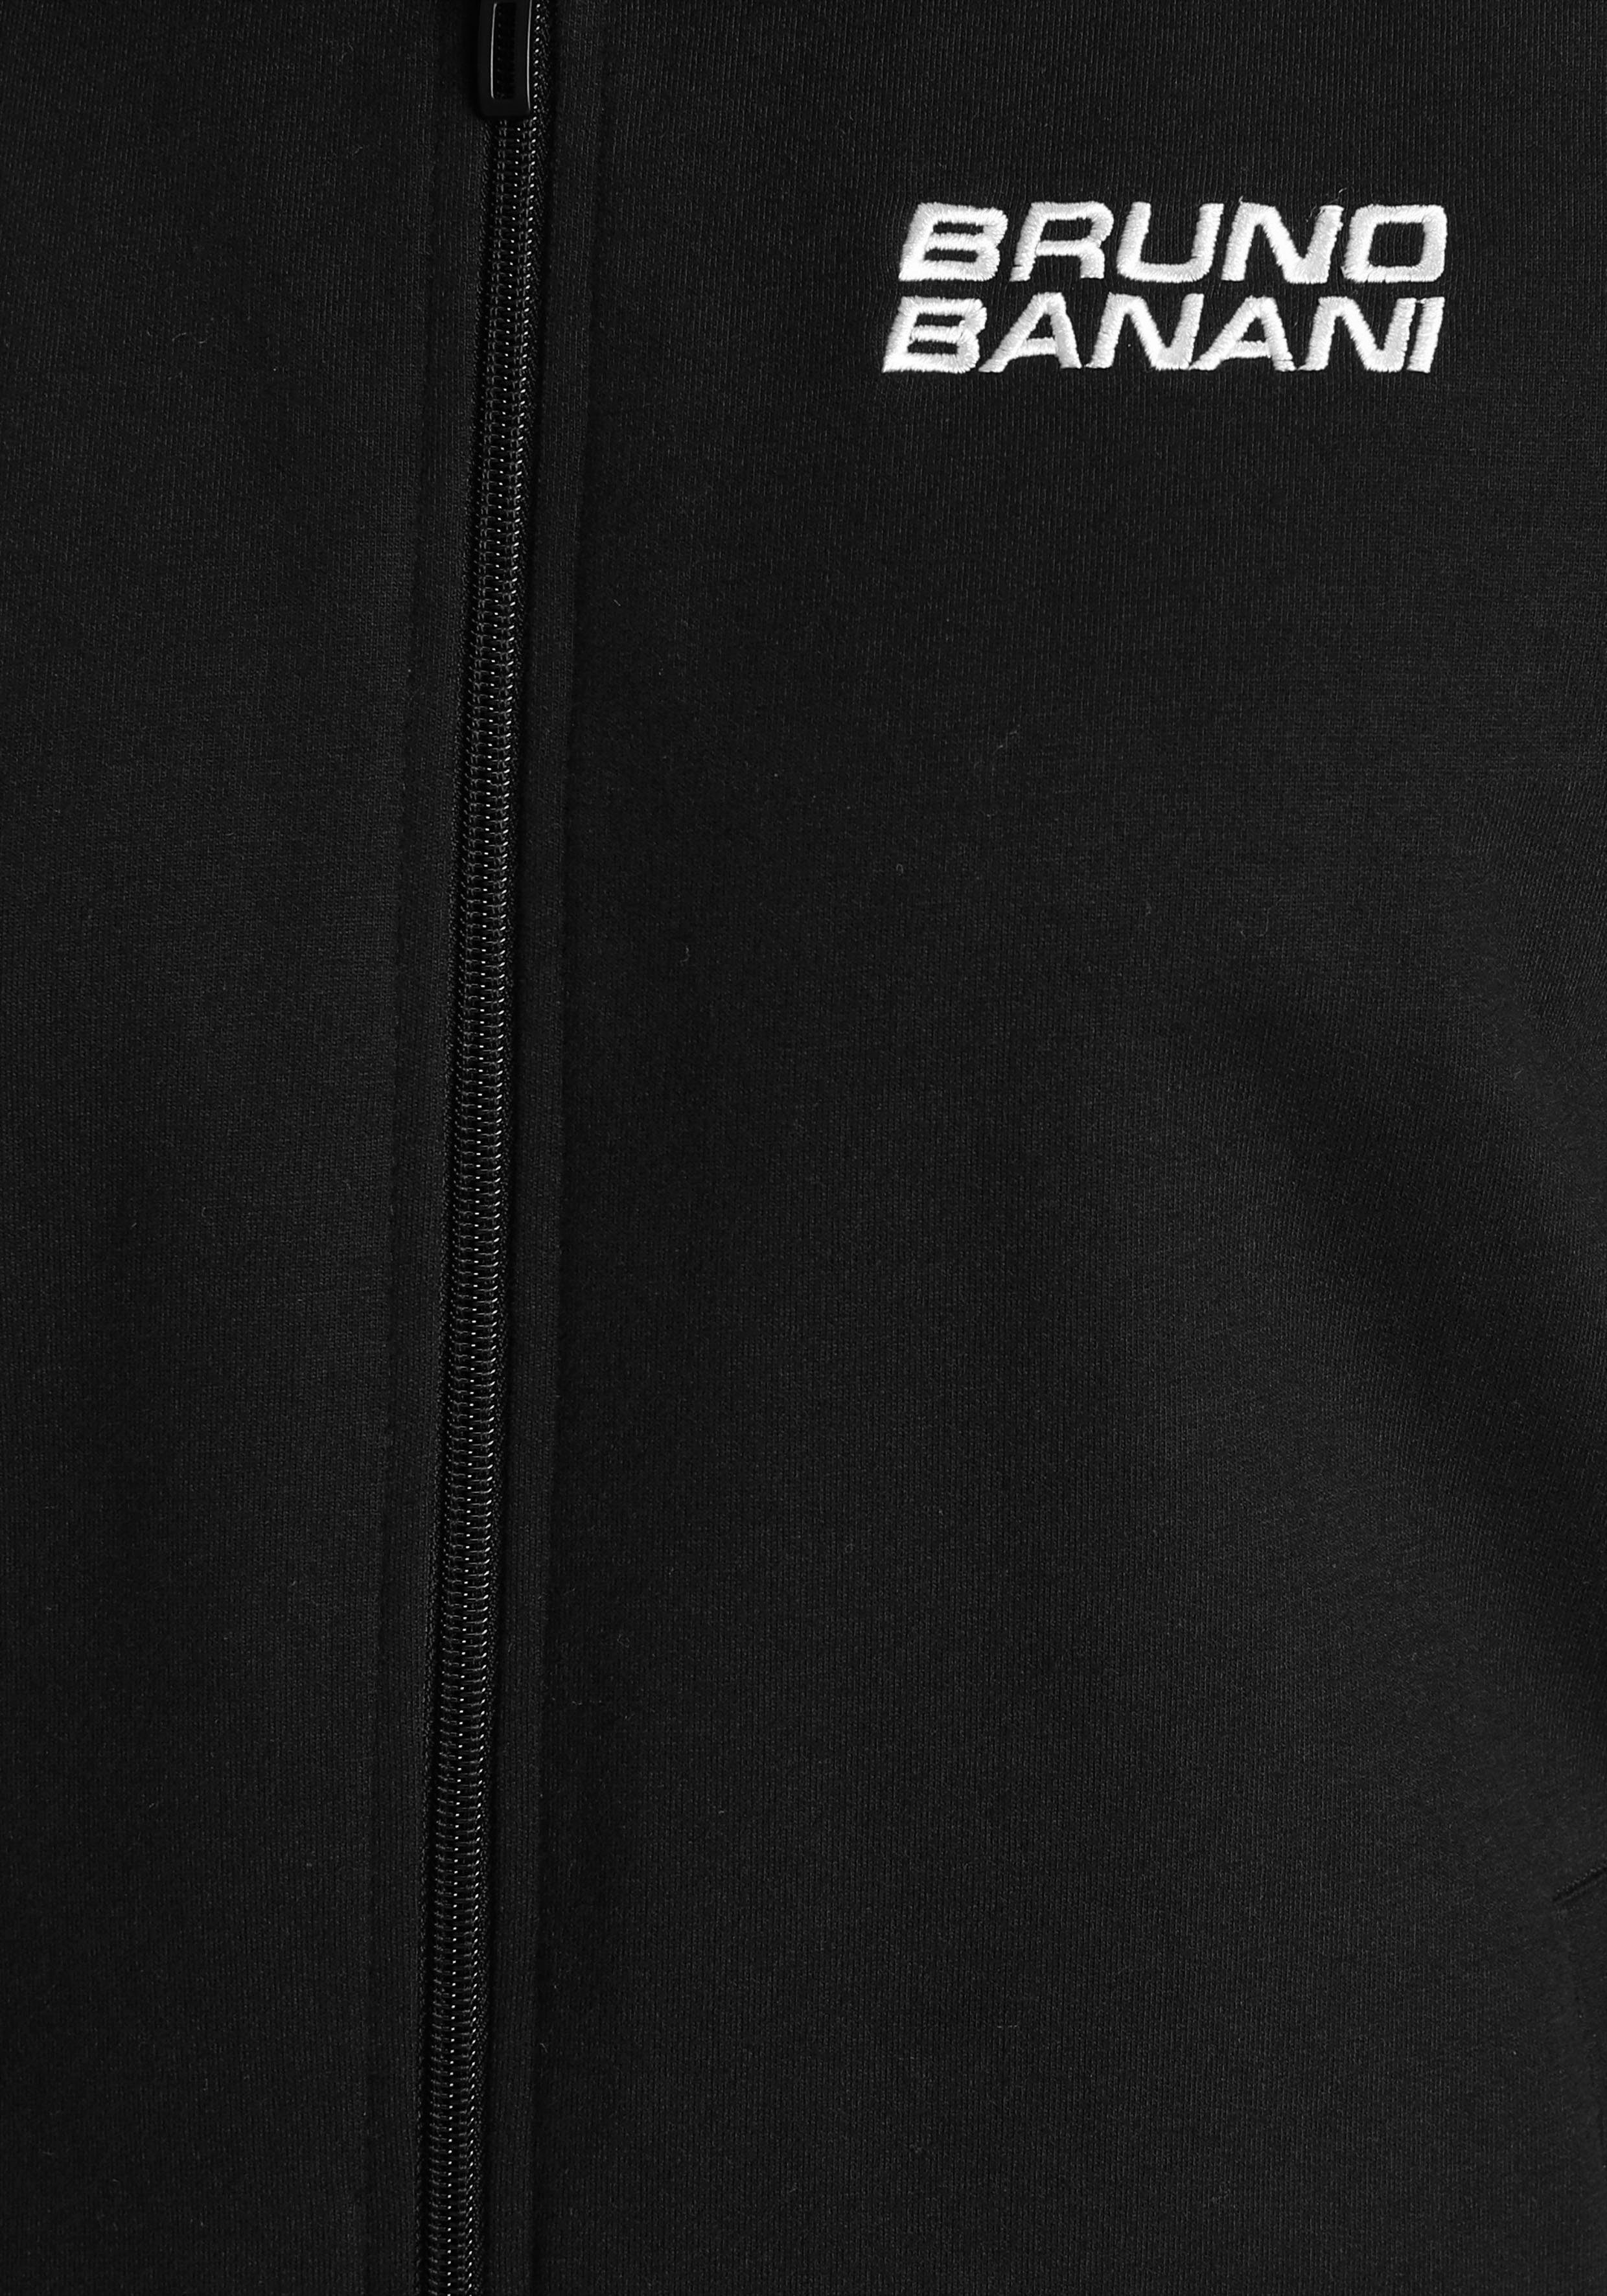 Comfort schwarz-grau Stickerei mit Bruno Jogginganzug Fit, Logo Banani